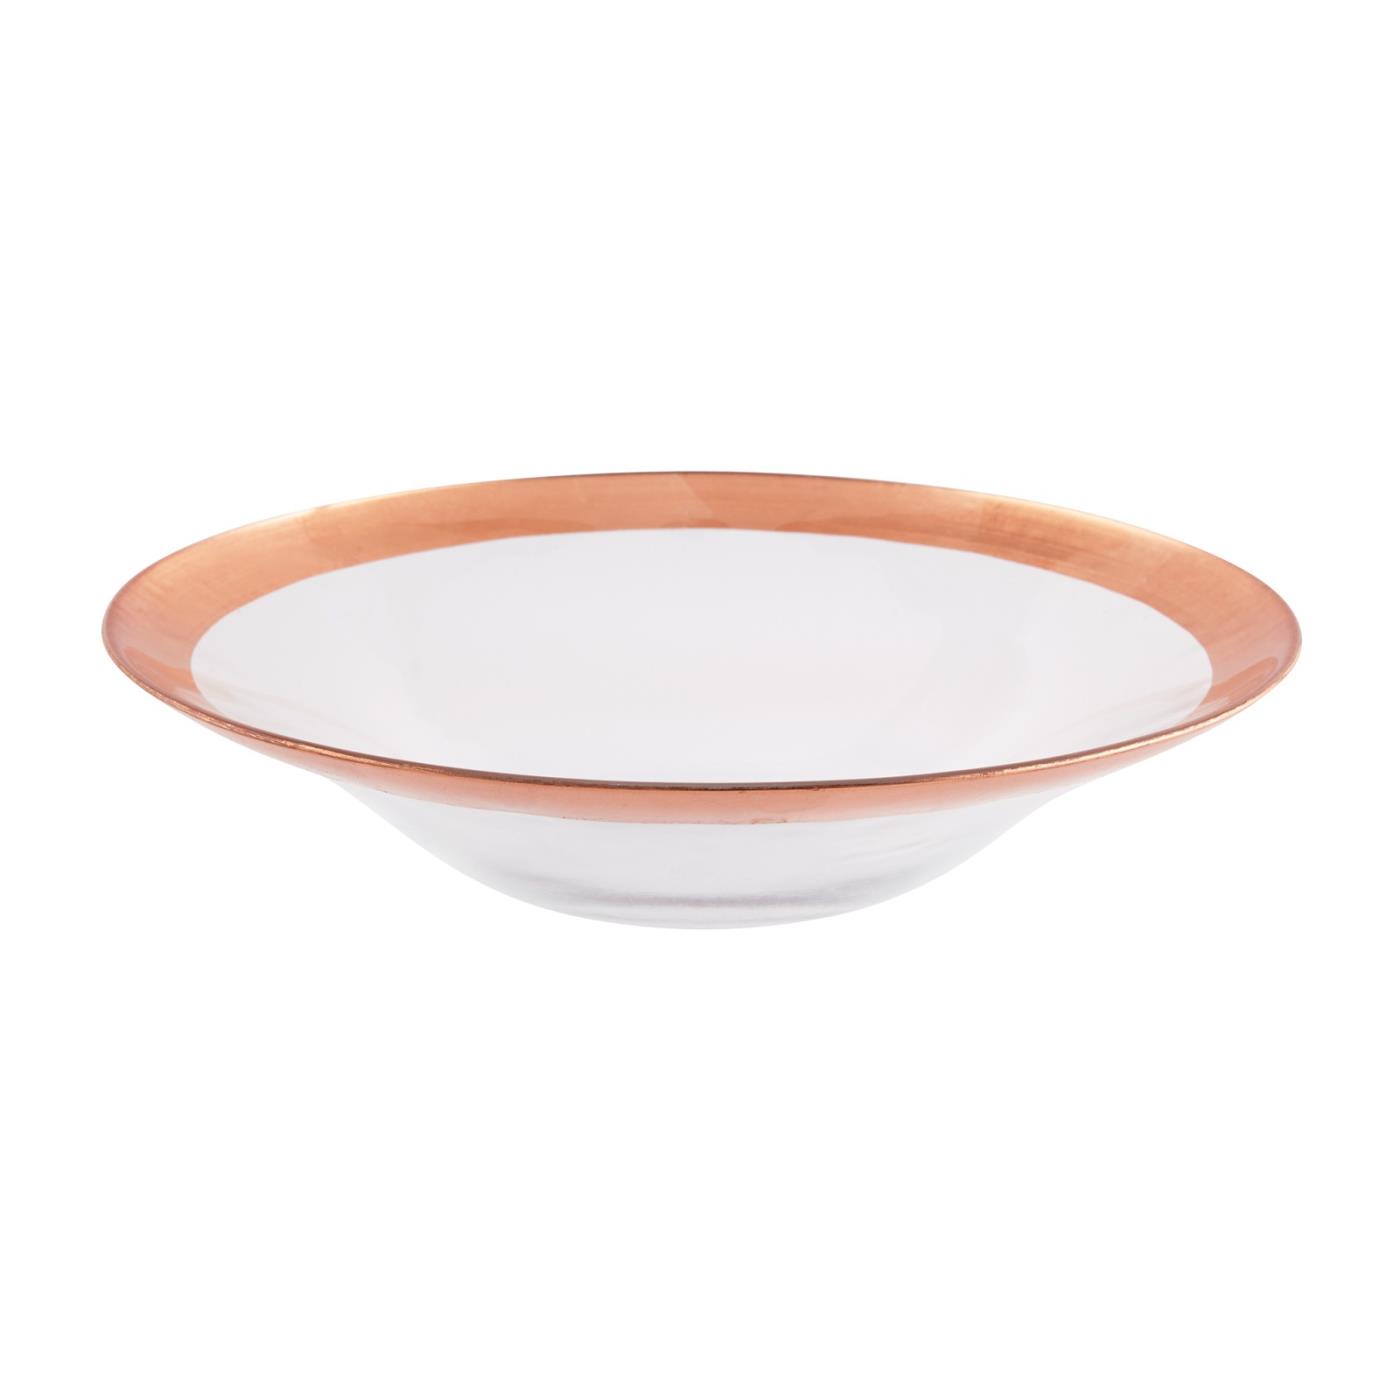 Copper Luster Bowl - 12.5"